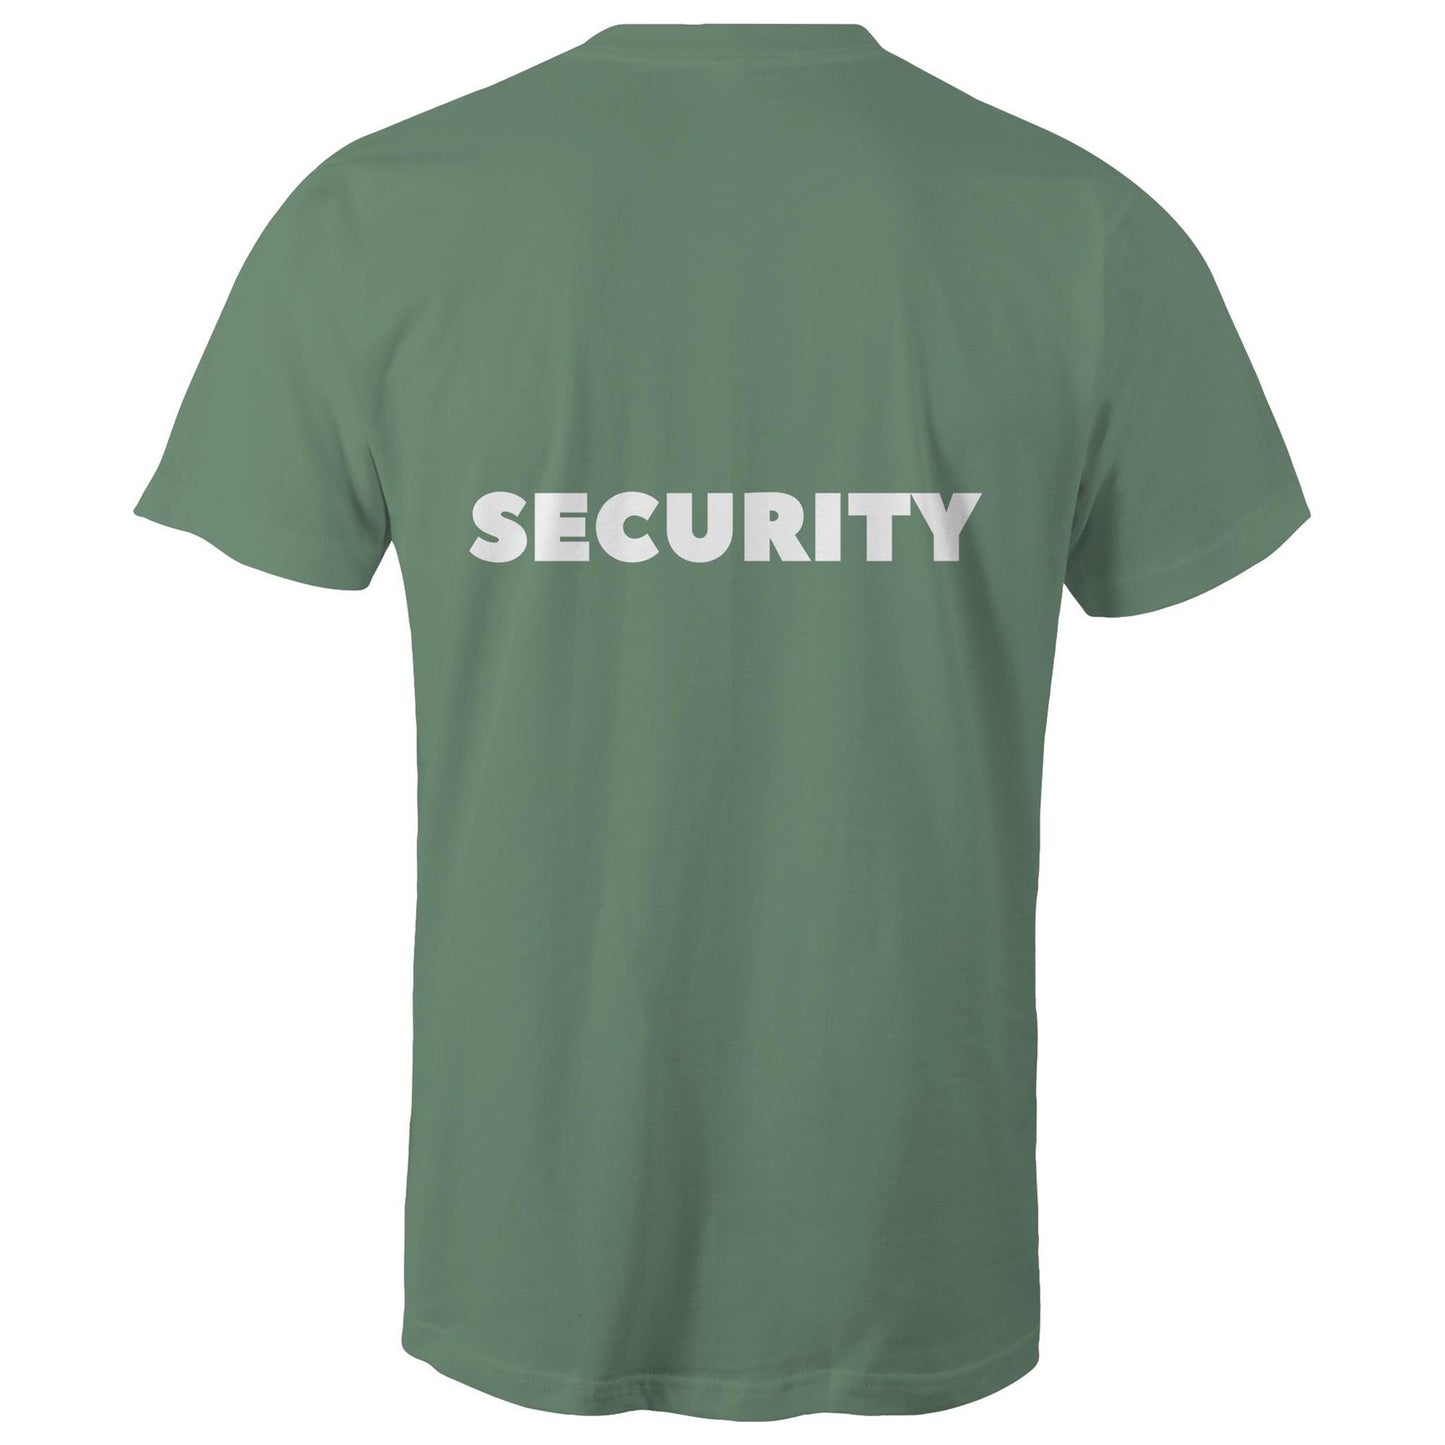 SECURITY - Unisex T-Shirt